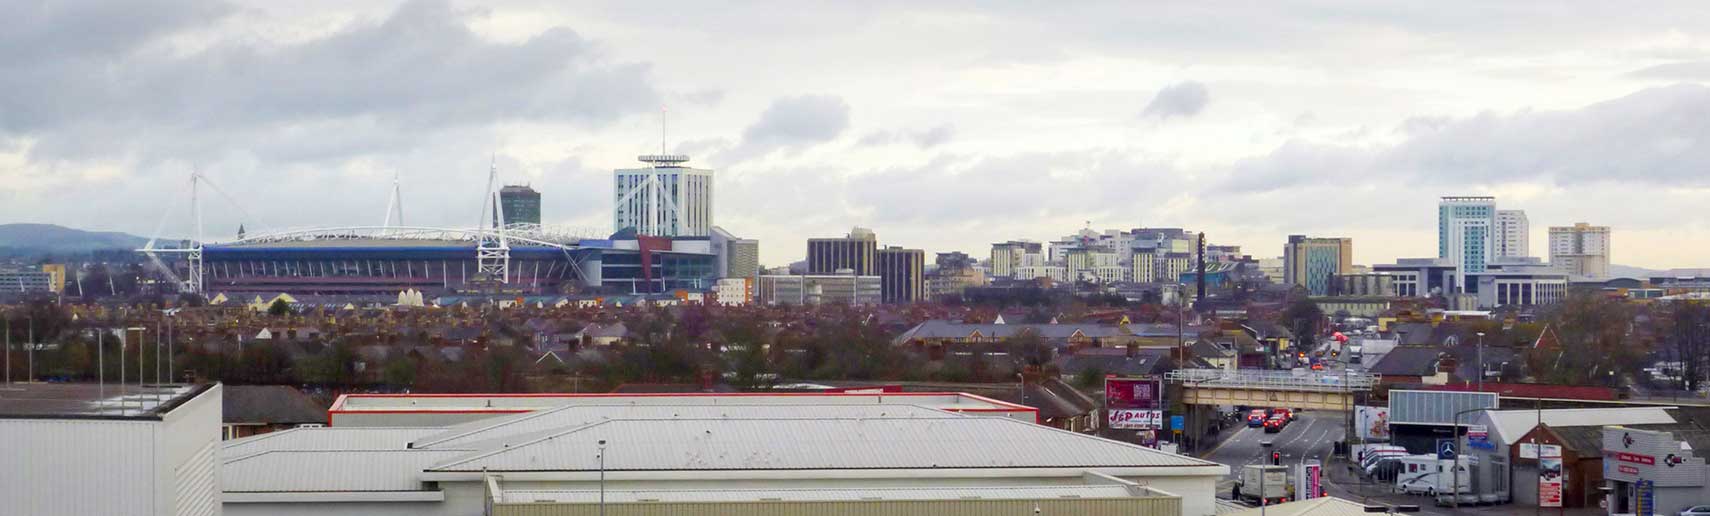 Cardiff skyline with Millennium Stadium, Wales, United Kingdom